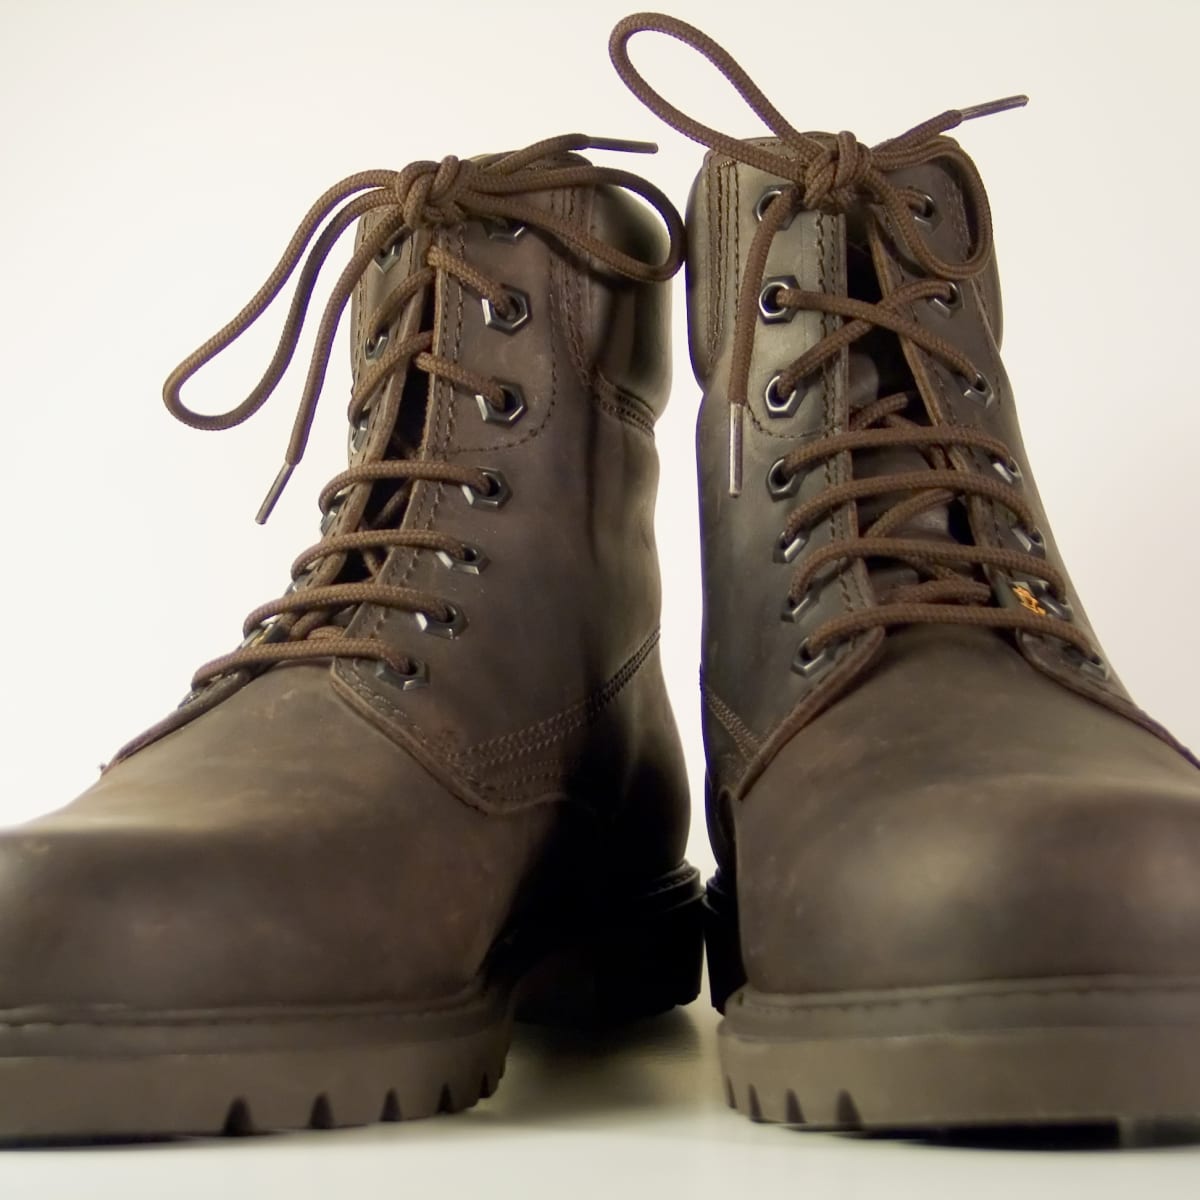 boots that change color